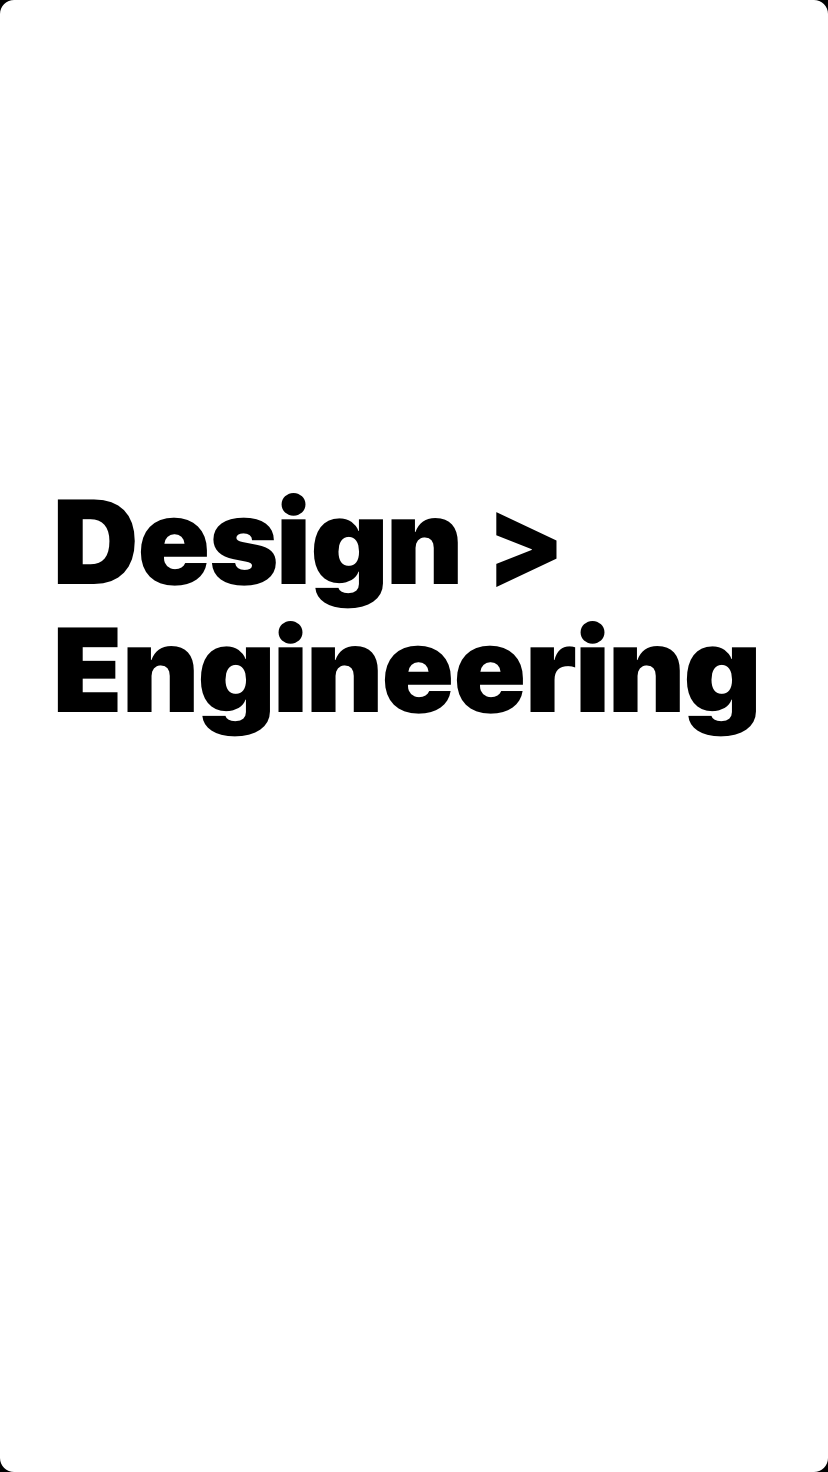 Design > Engineering